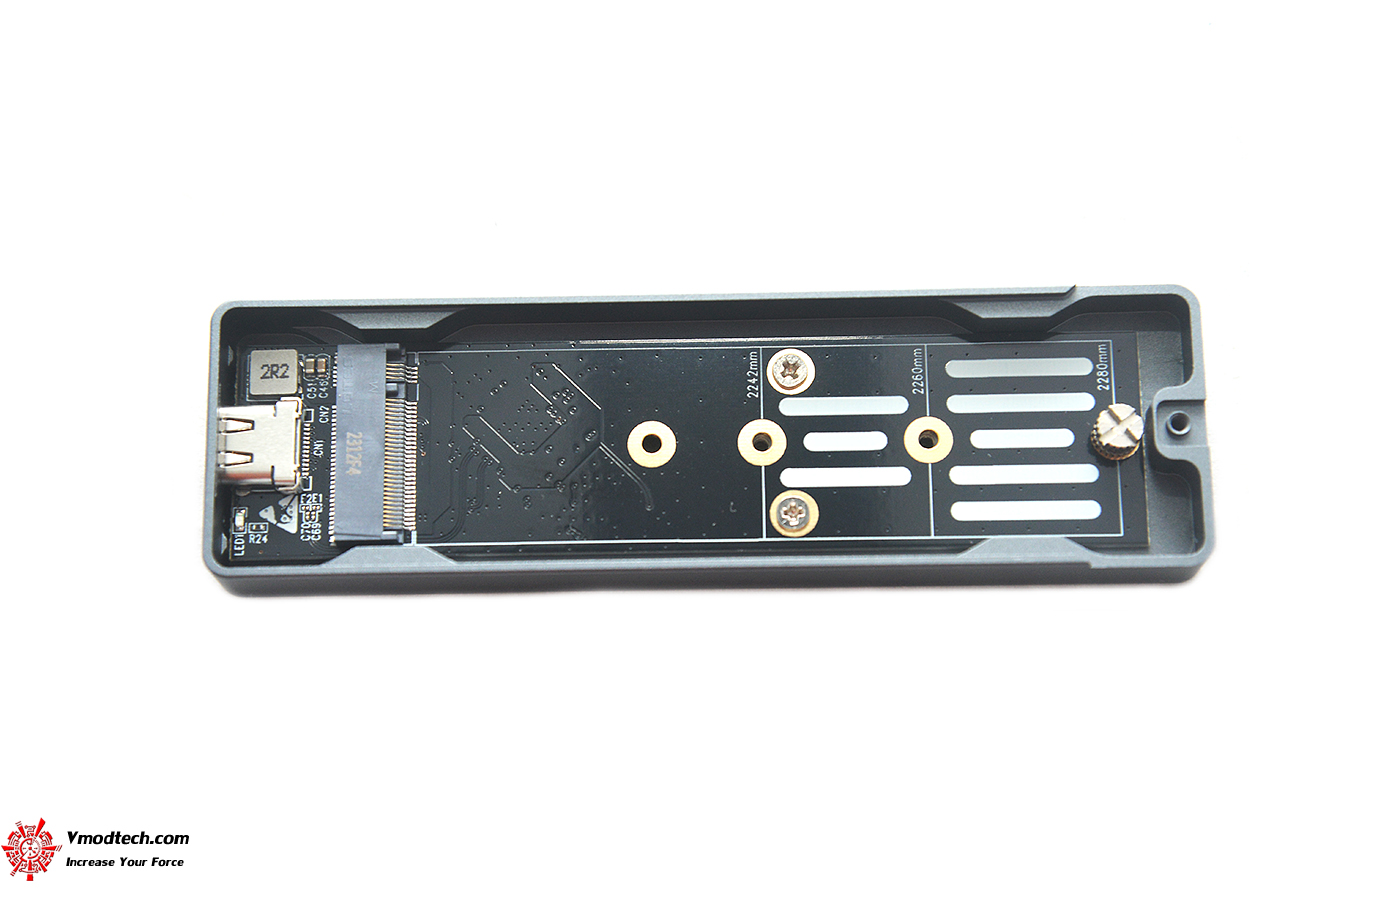 dsc 4177 HIKSEMI M.2 SSD ENCLOSURE MD202 REVIEW